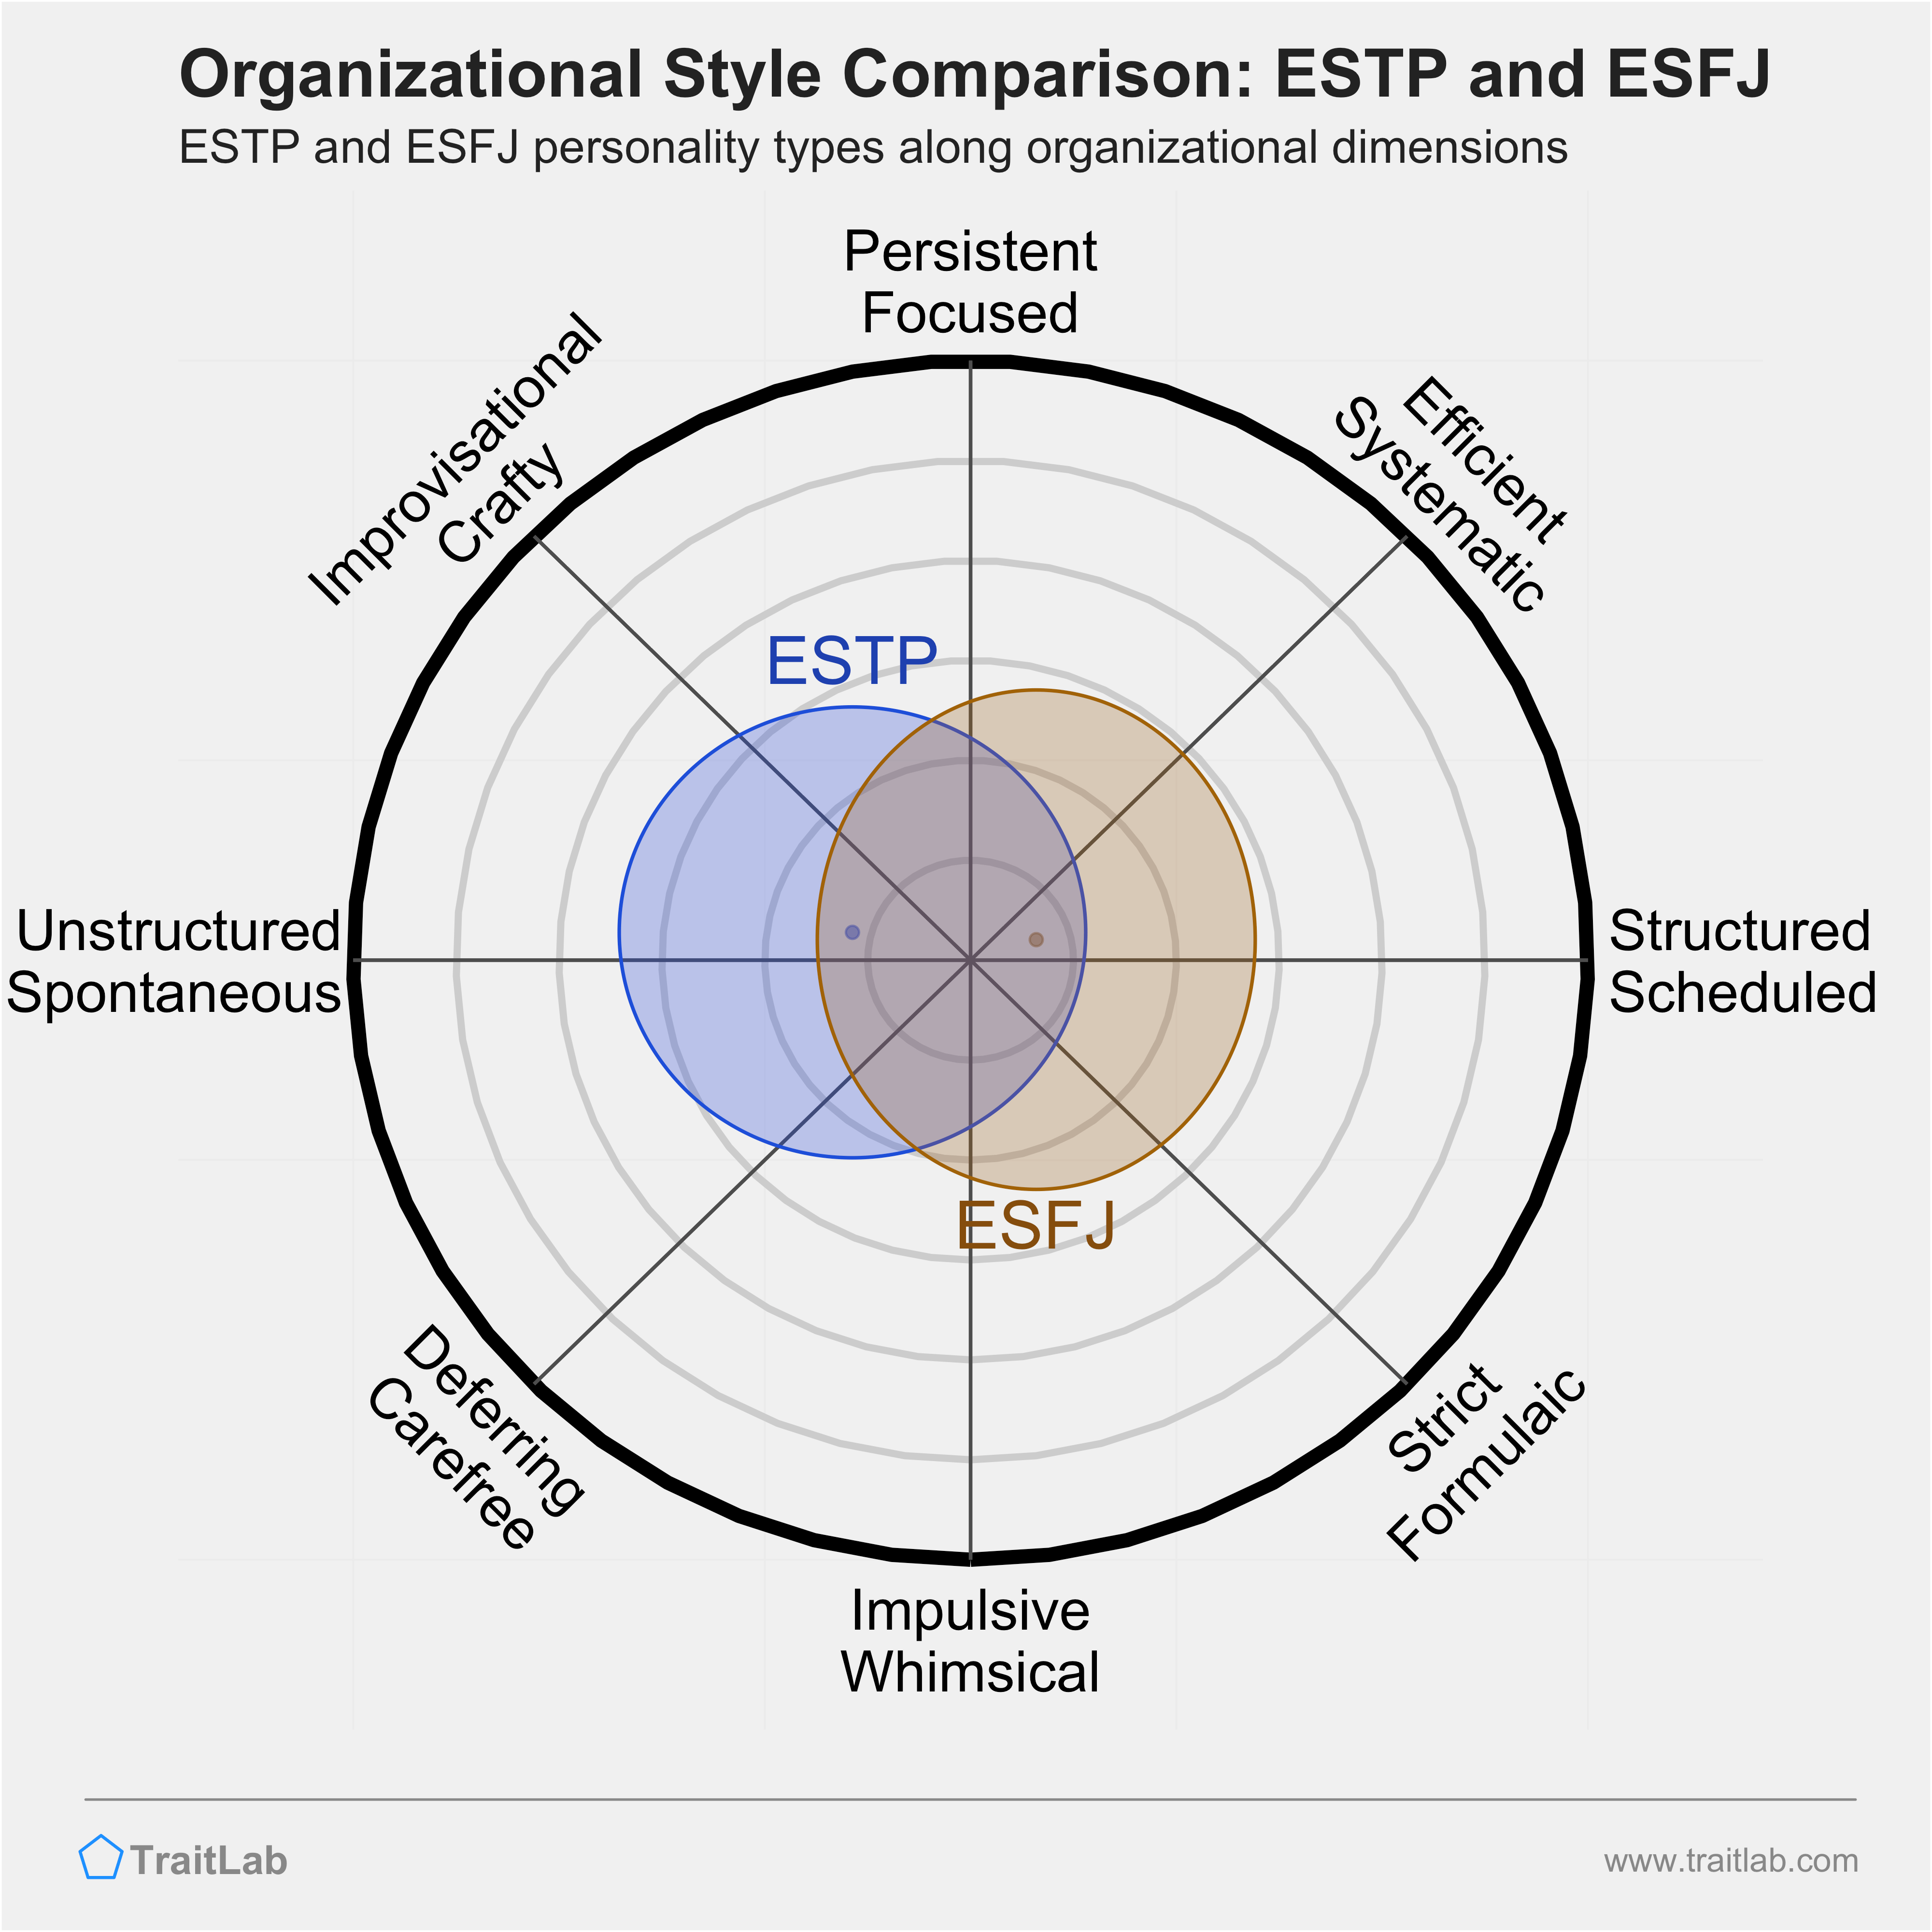 ESTP and ESFJ comparison across organizational dimensions